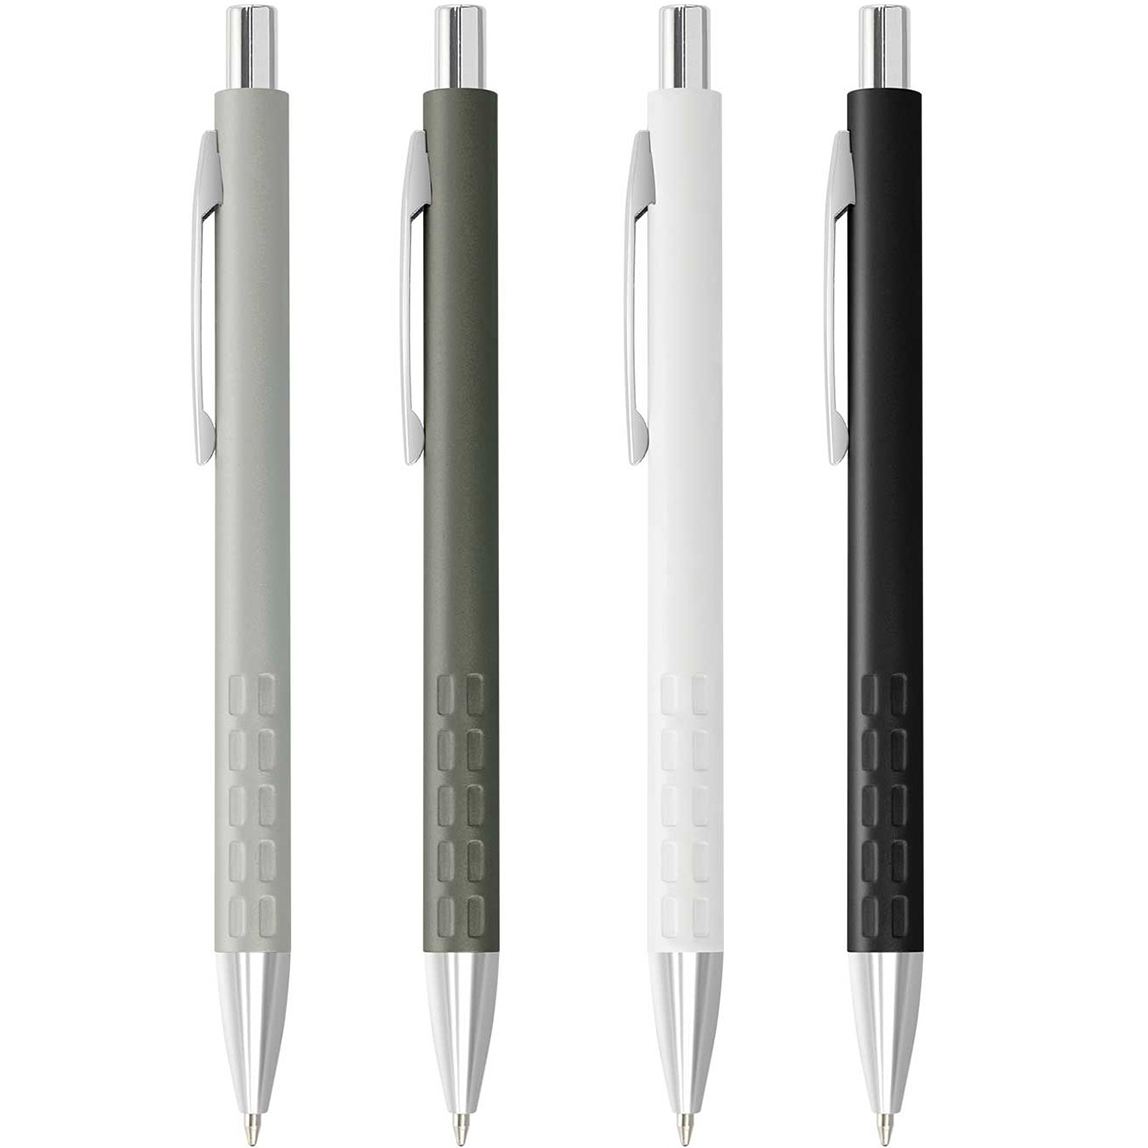 Vienna Pen Features